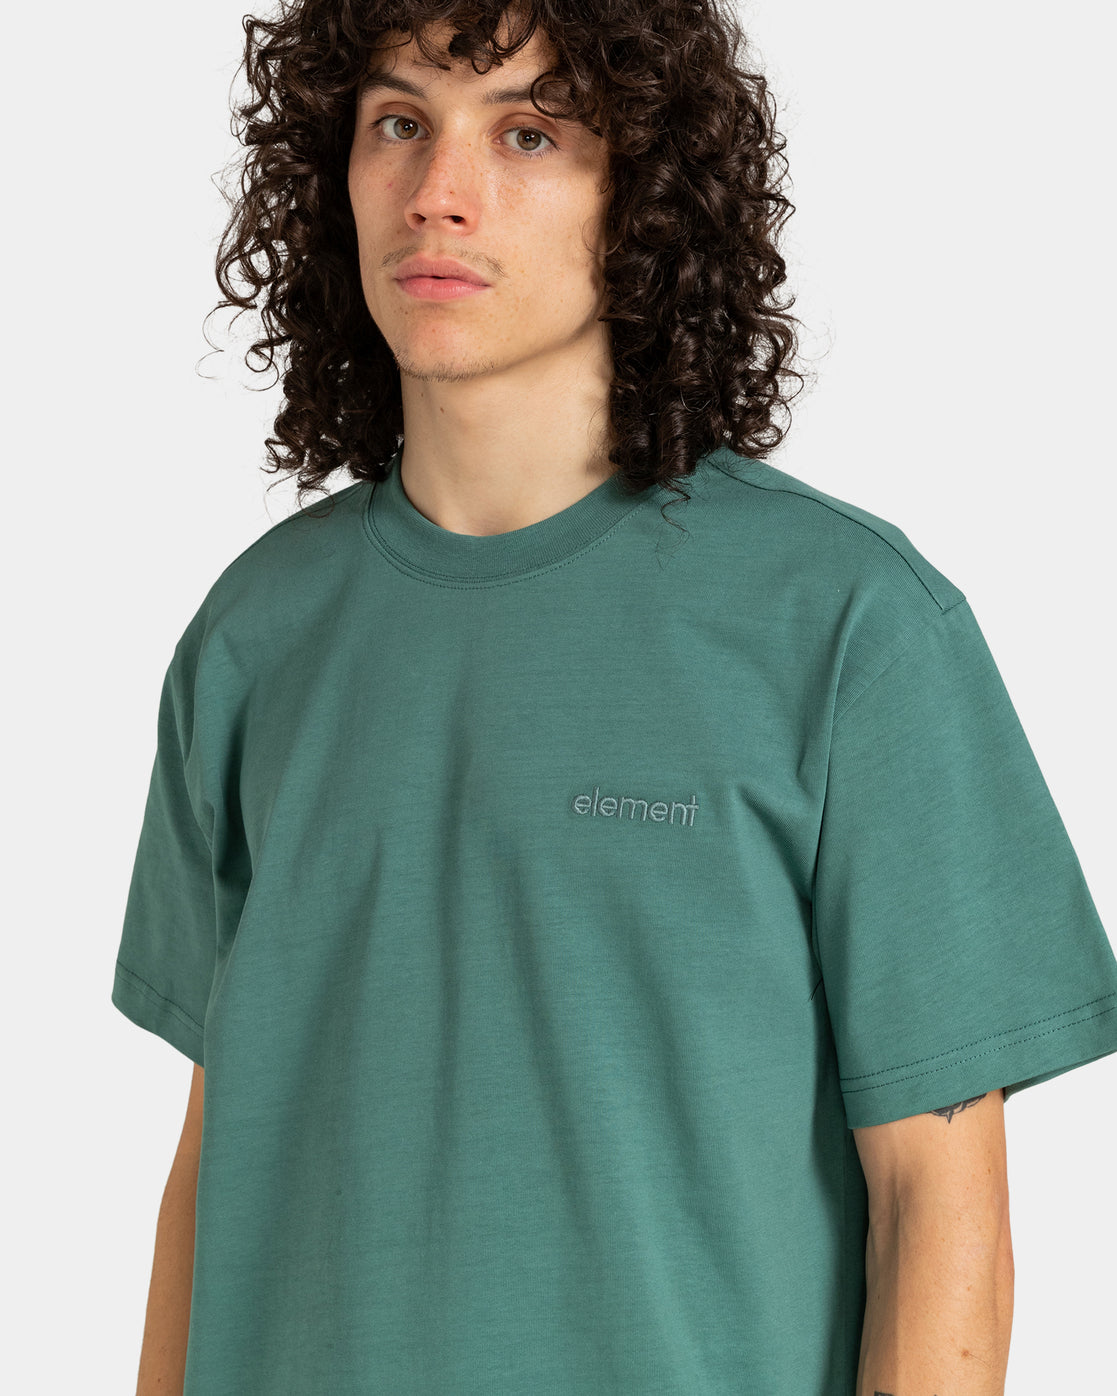 Camiseta Element Skateboards Crail 3.0 North Atlantic